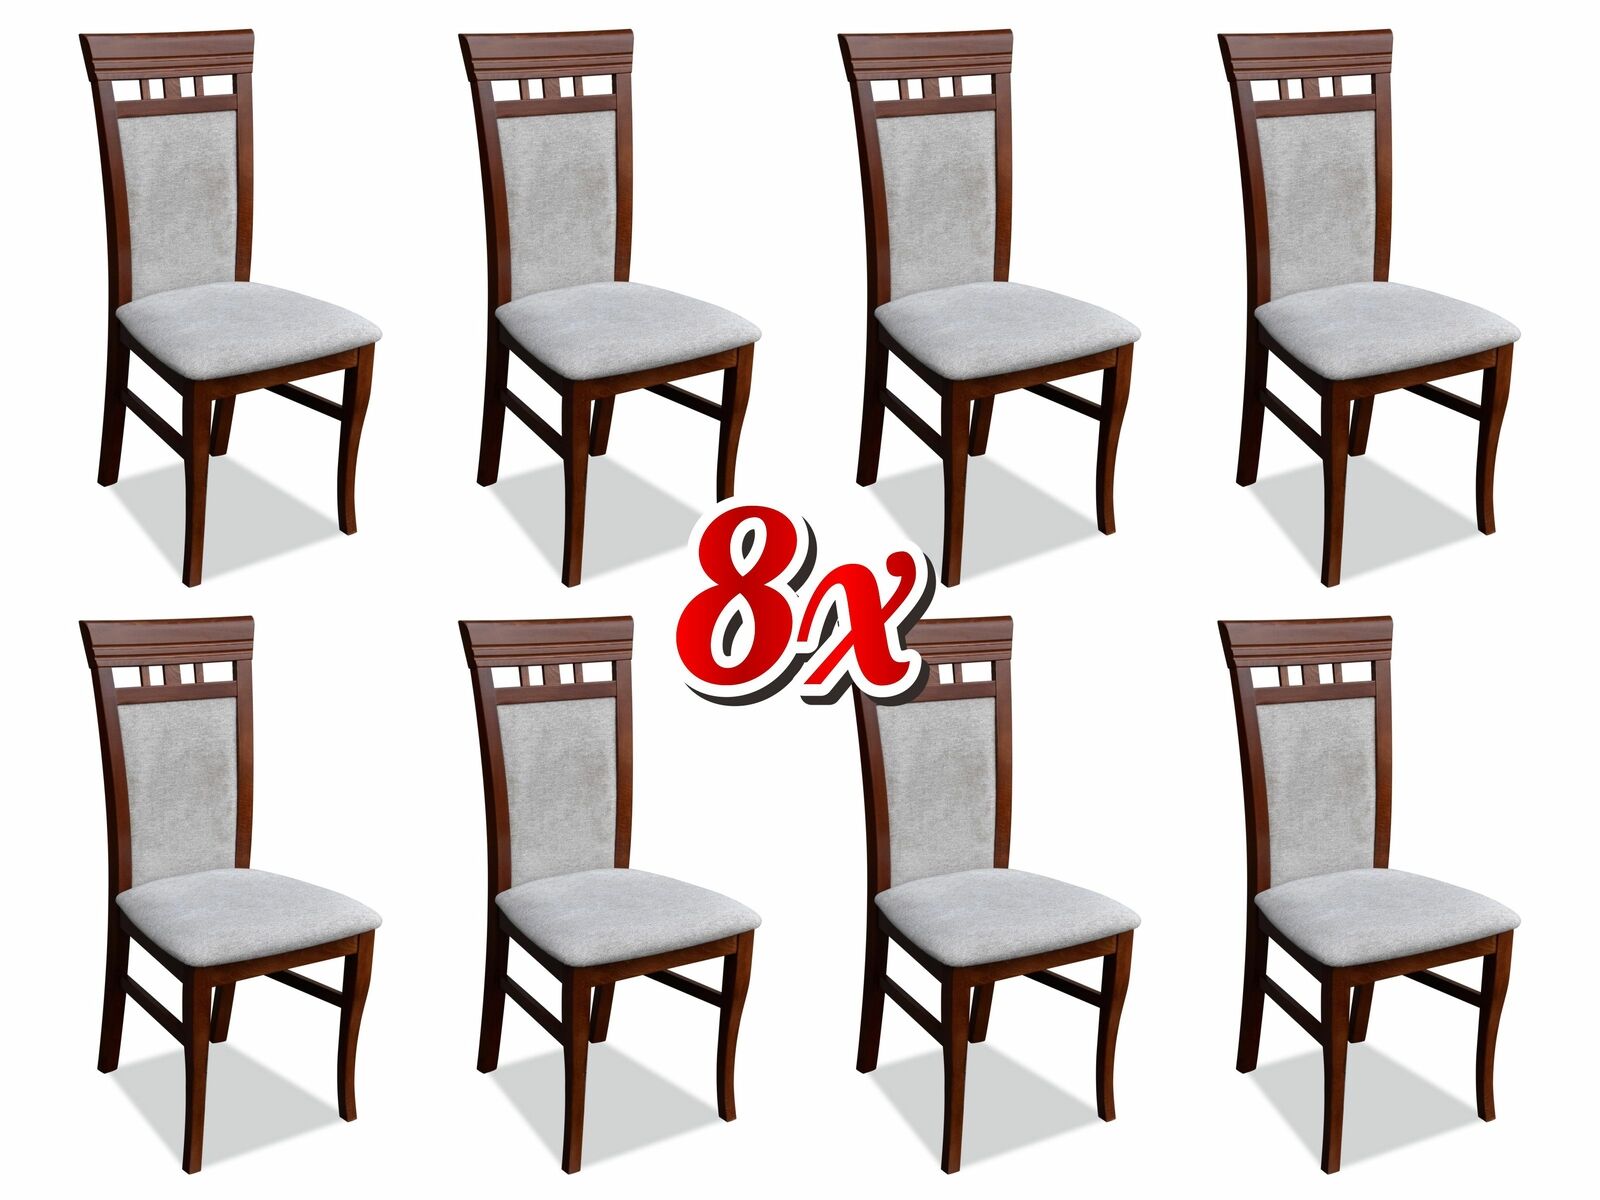 Esszimmer Komplette Sitzgruppe Design Stuhl Set Stühle 8x Garnitur Gruppen Neu